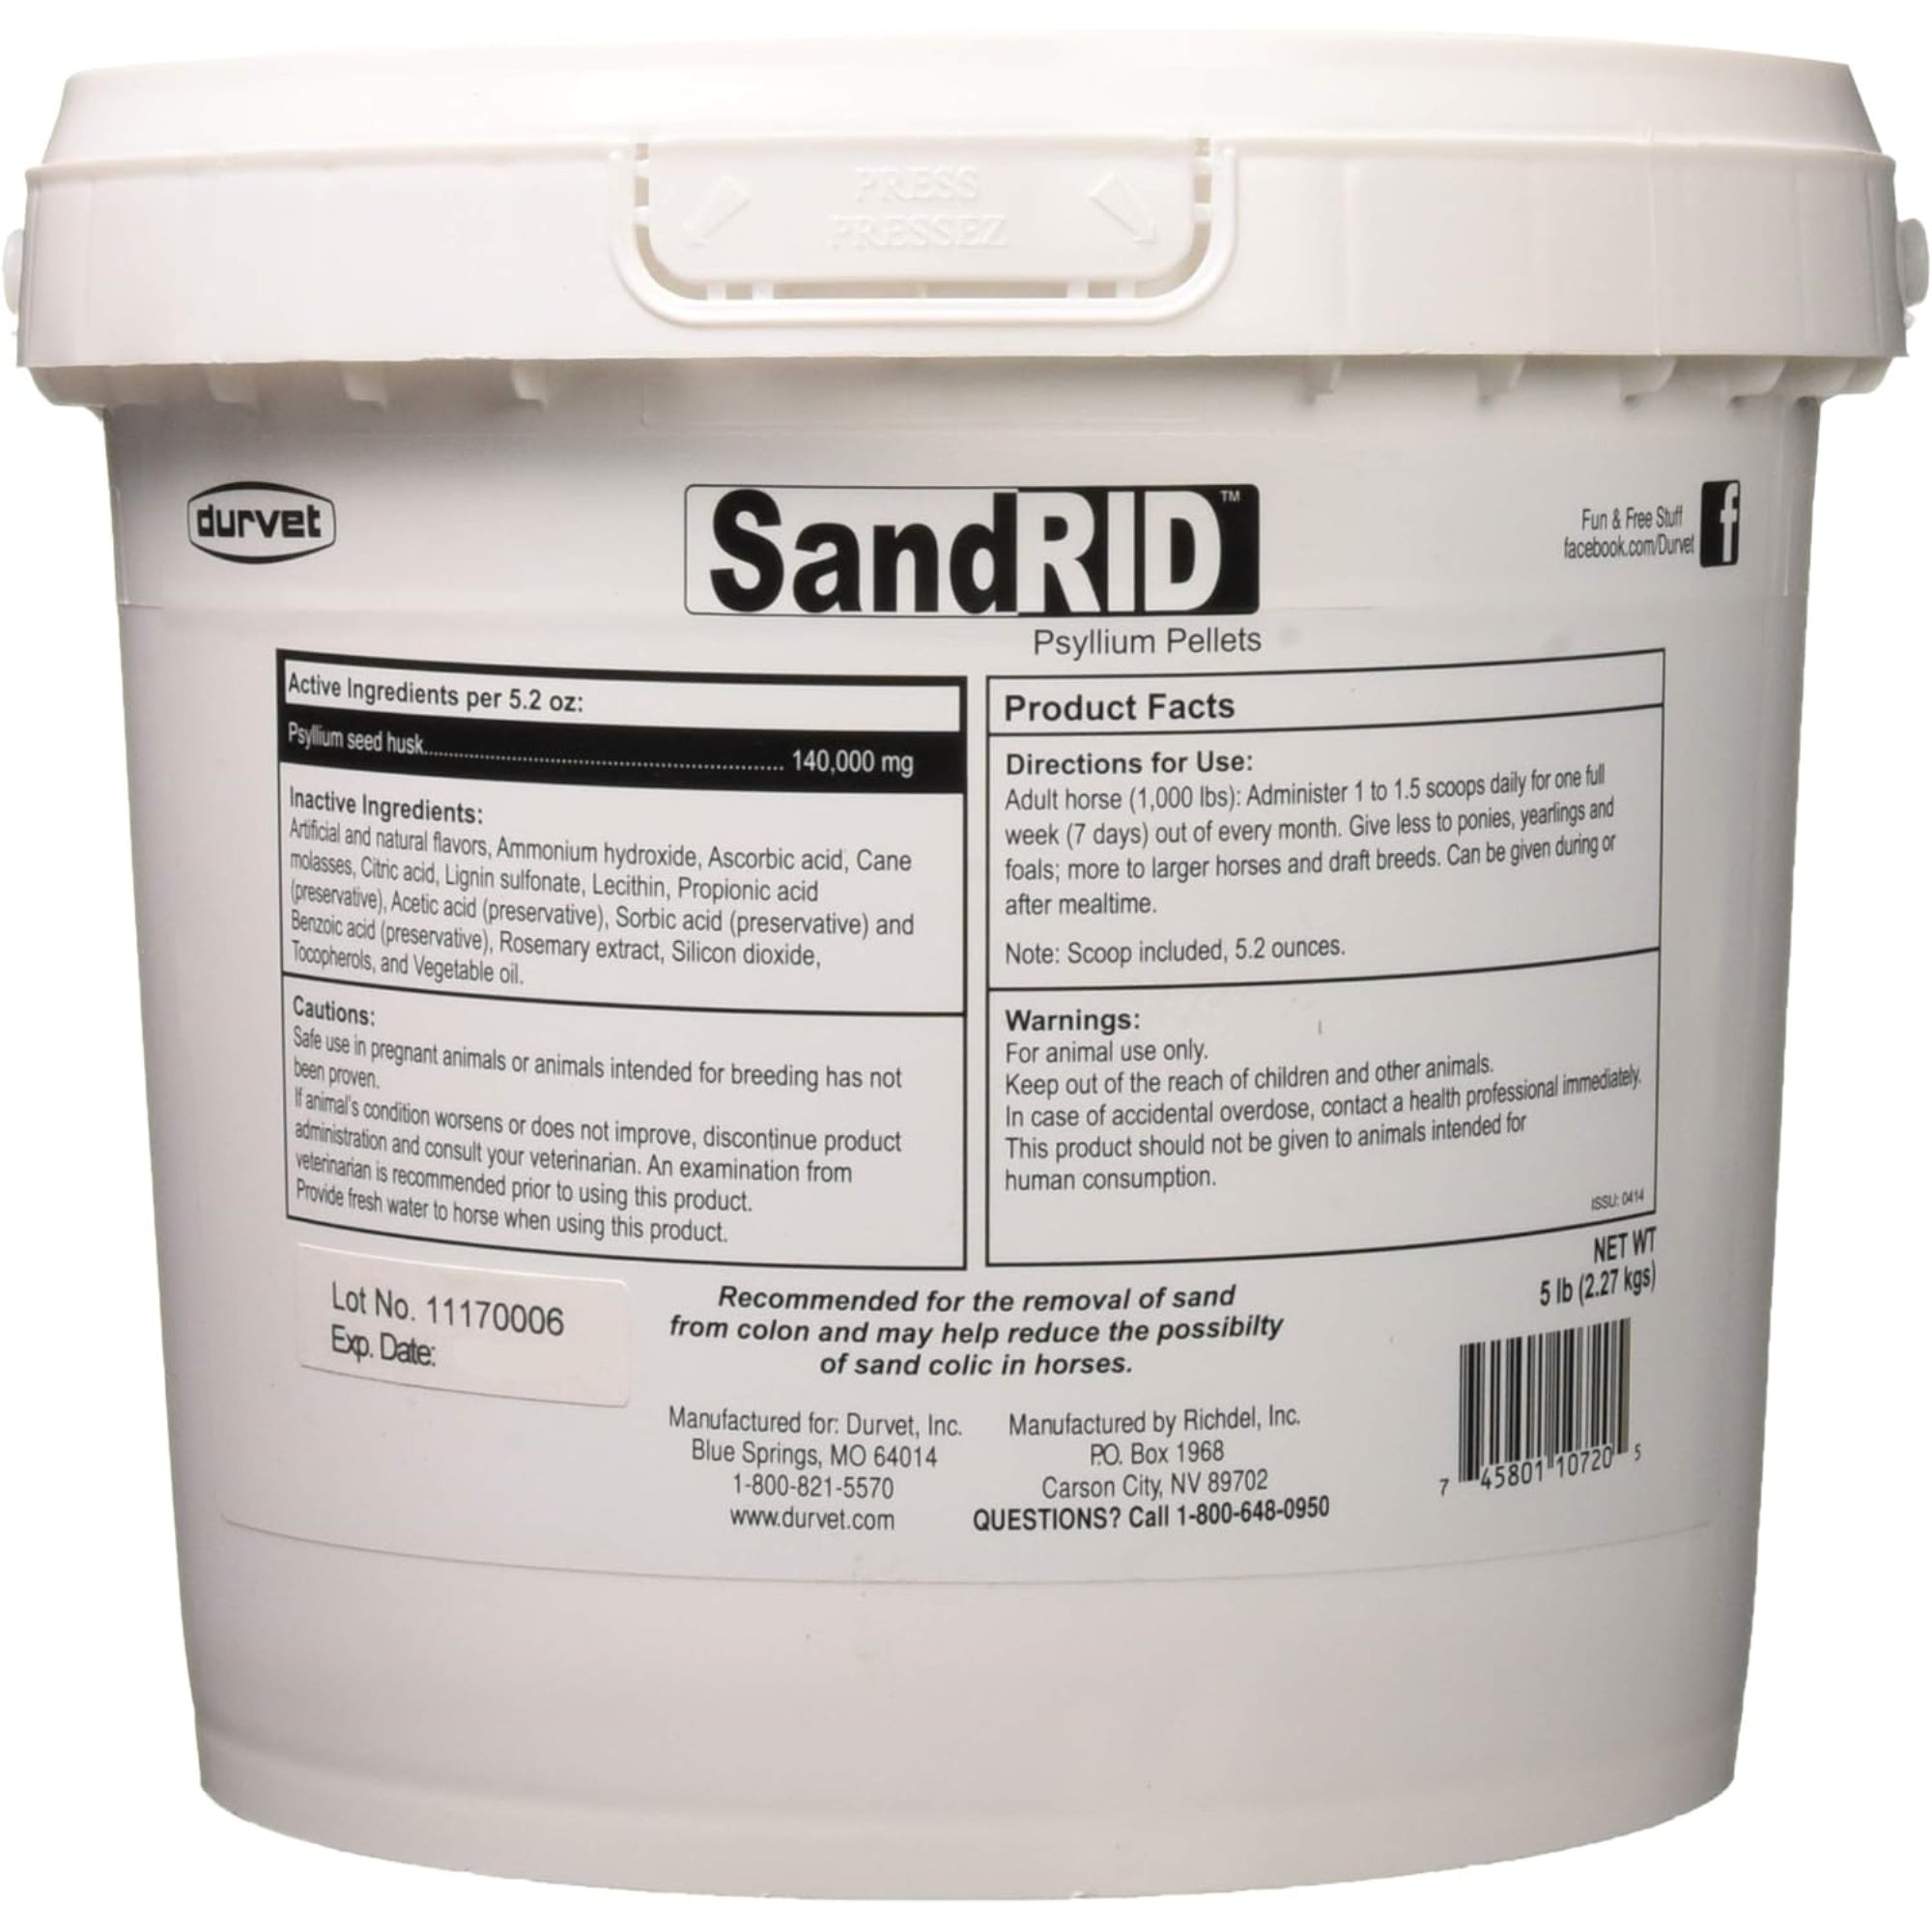 Durvet SandRID Psyllium Pellets for Horses, Apple Flavored, 5lb Pail